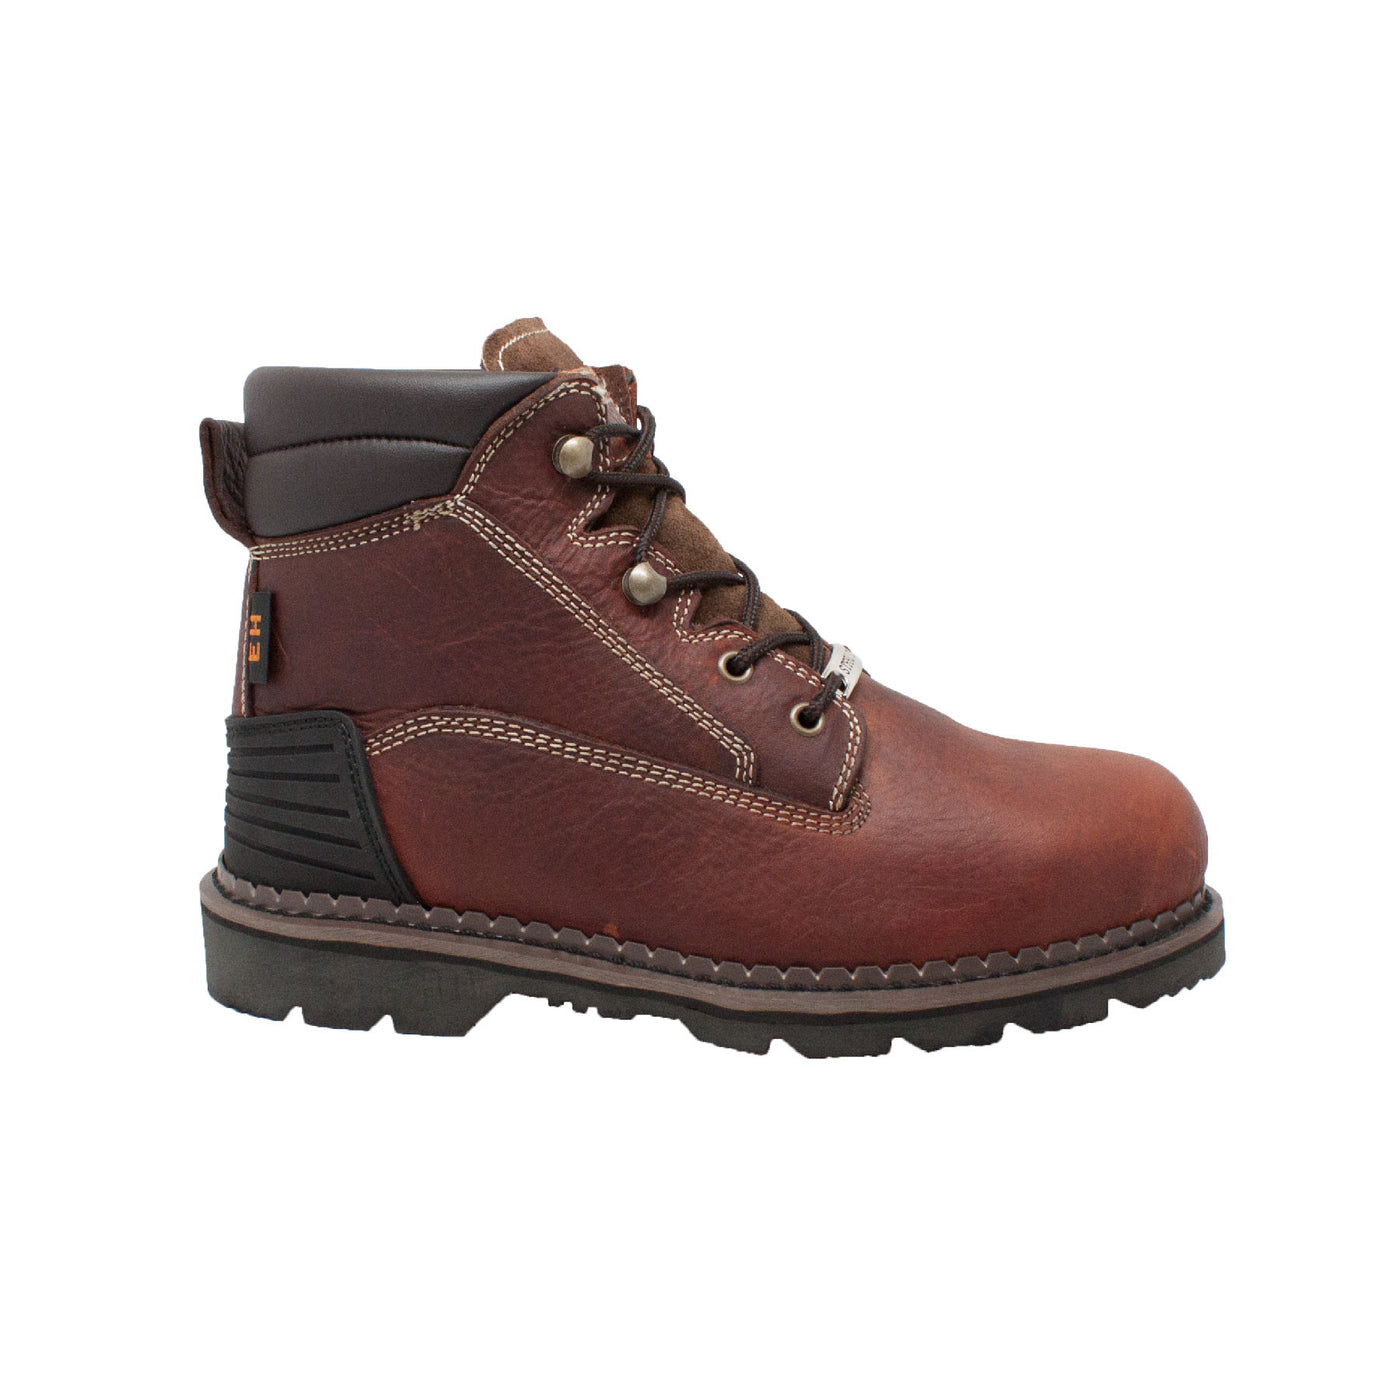 Men's 6" Steel Toe Work Boot Brown - 9400 - Shop Genuine Leather men & women's boots online | AdTecFootWear